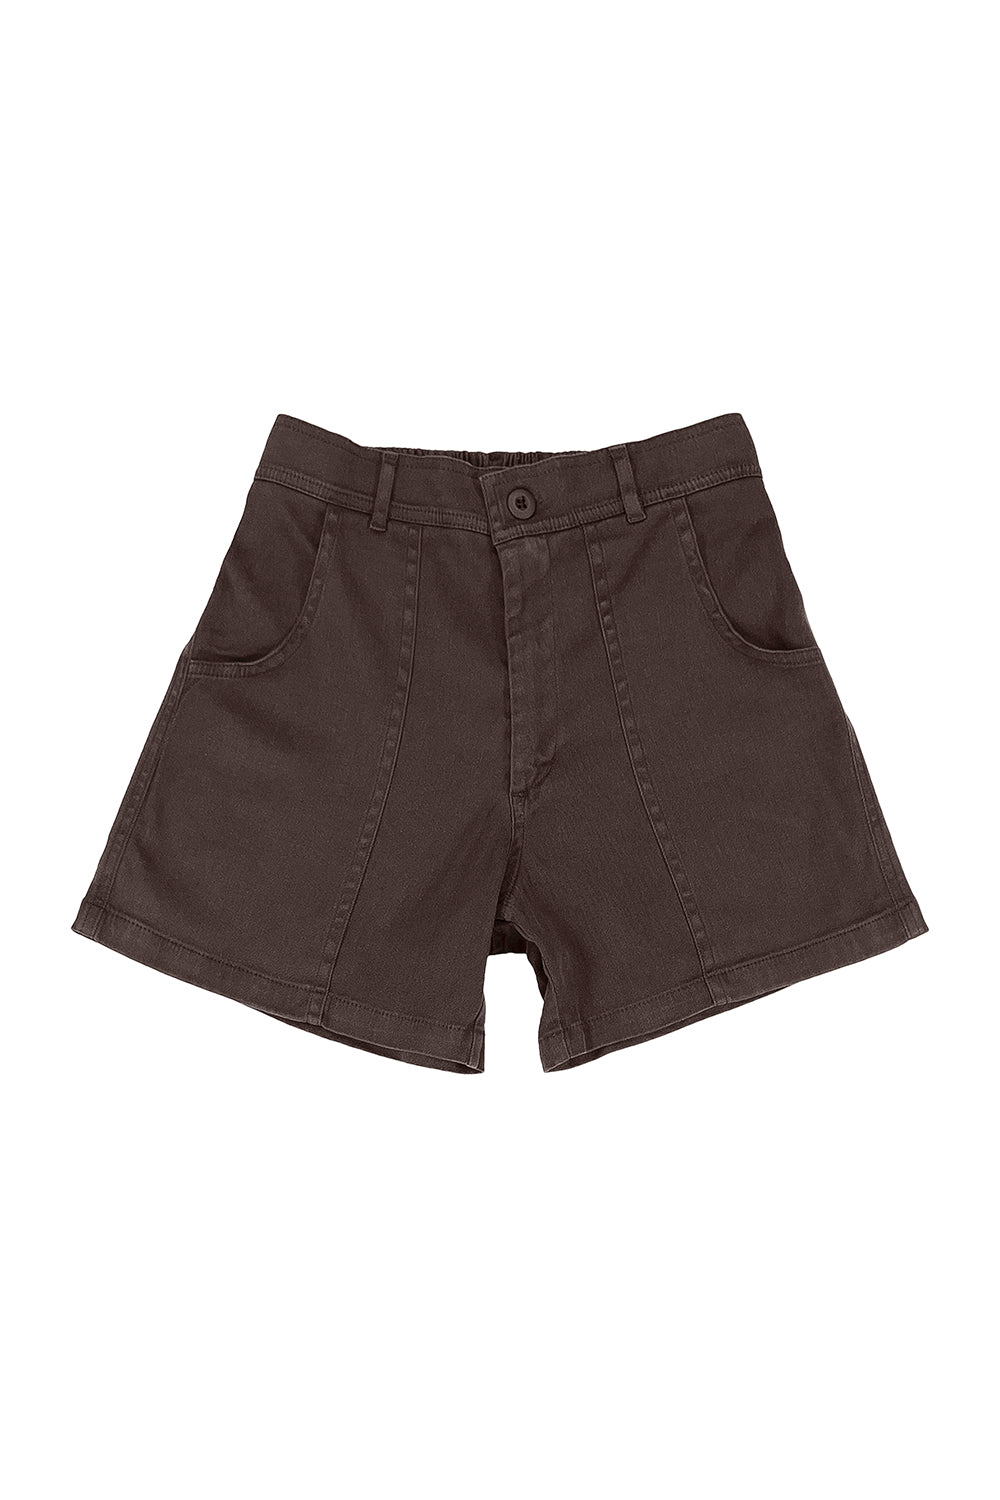 Venice Shorts | Jungmaven Hemp Clothing